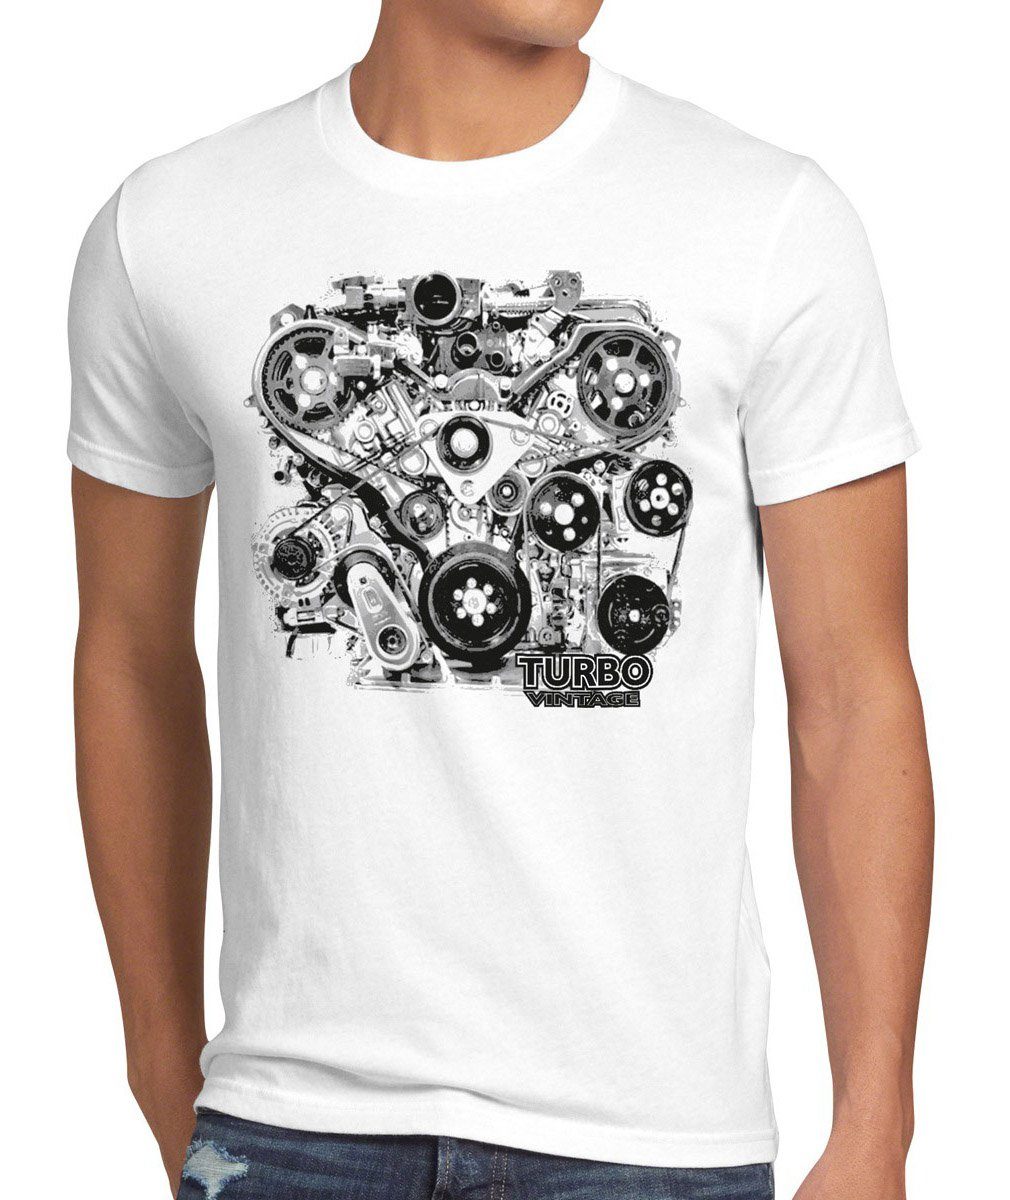 werkstatt Print-Shirt us Car mustang Muscle V6 Auto tuning style3 Vintage Herren T-Shirt weiß motor Turbo V8